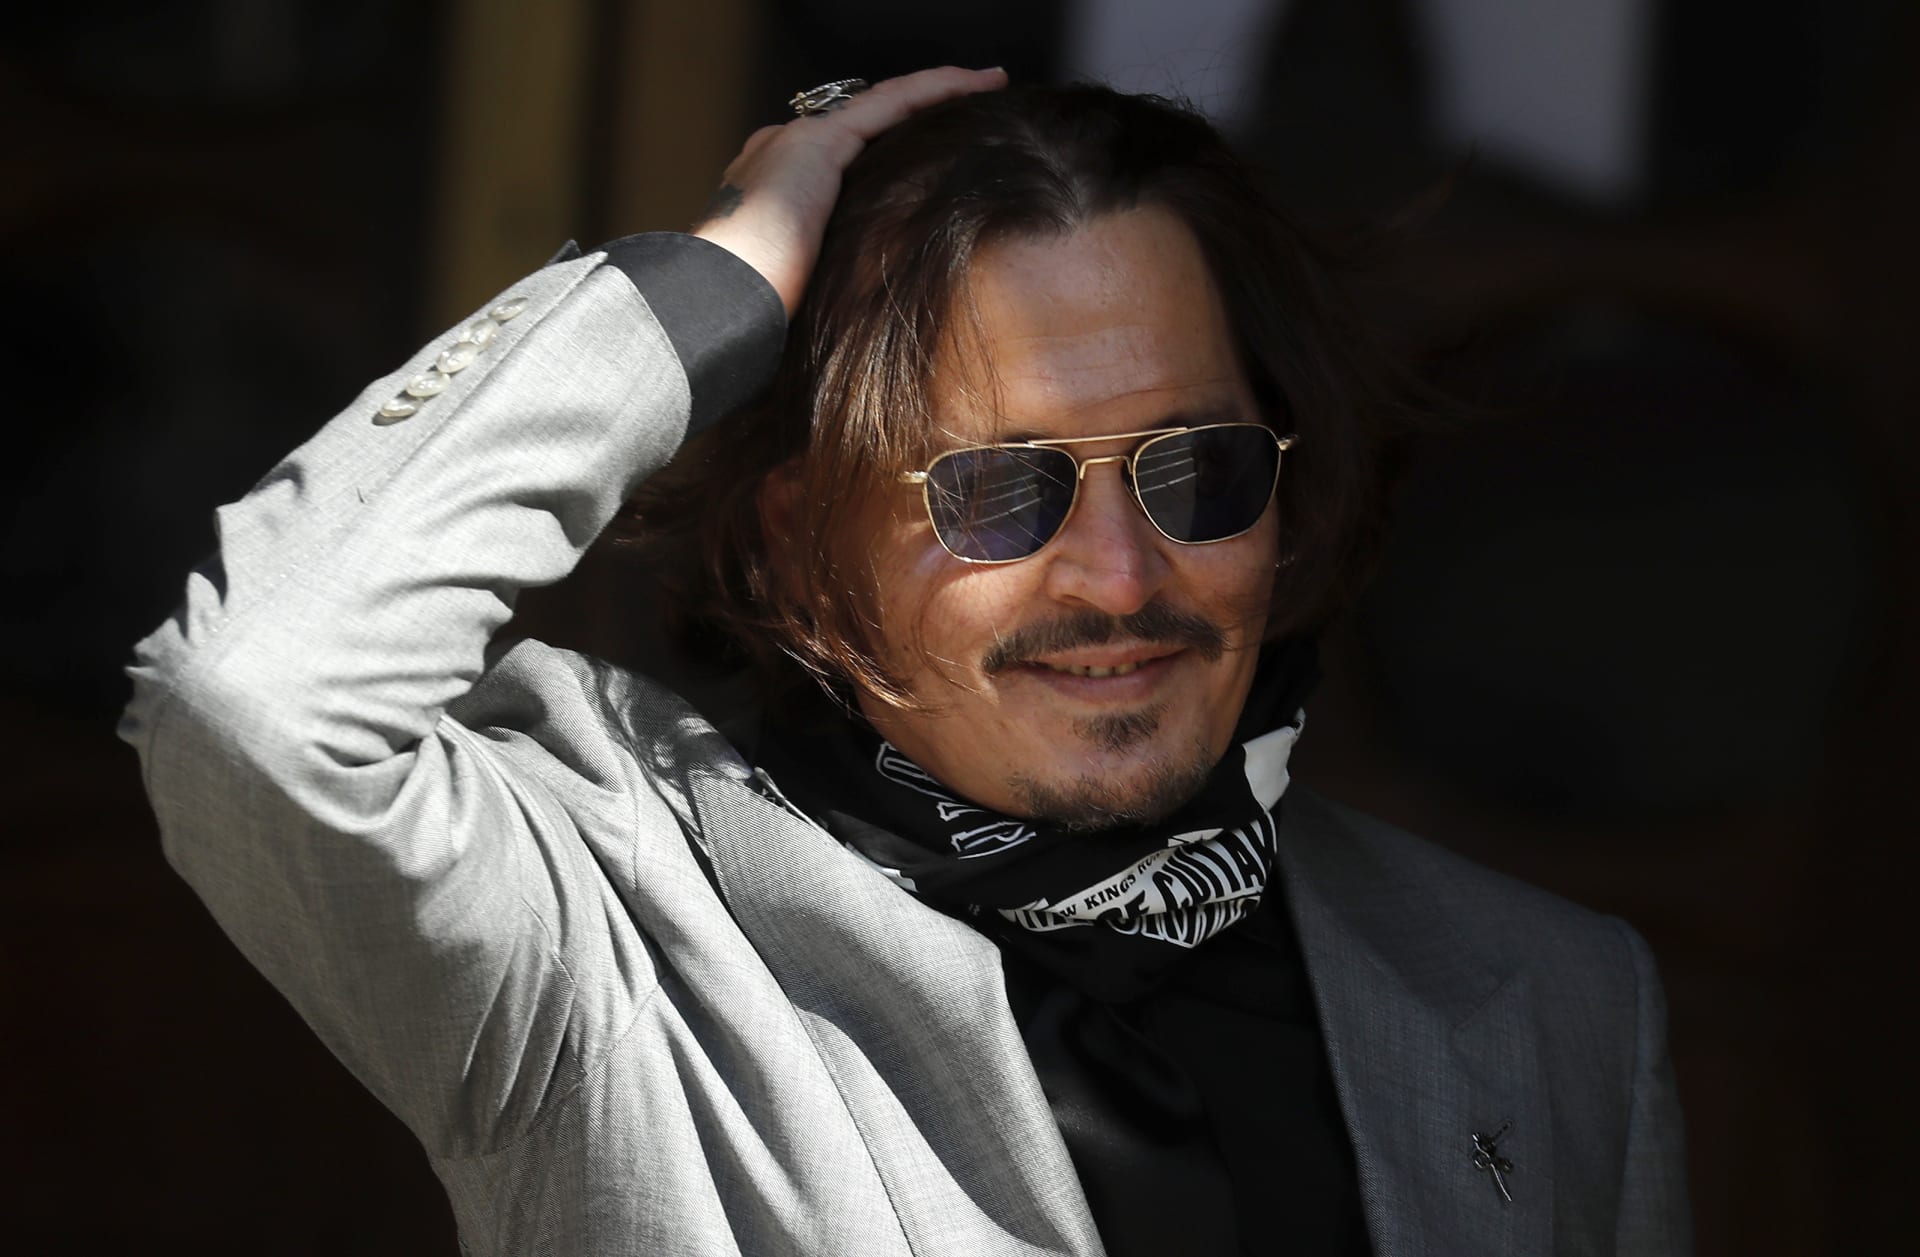 Organizátoři Karlovarského filmového festivalu v úterý potvrdili, že na letošní 55. ročník dorazí Depp jako čestný host.